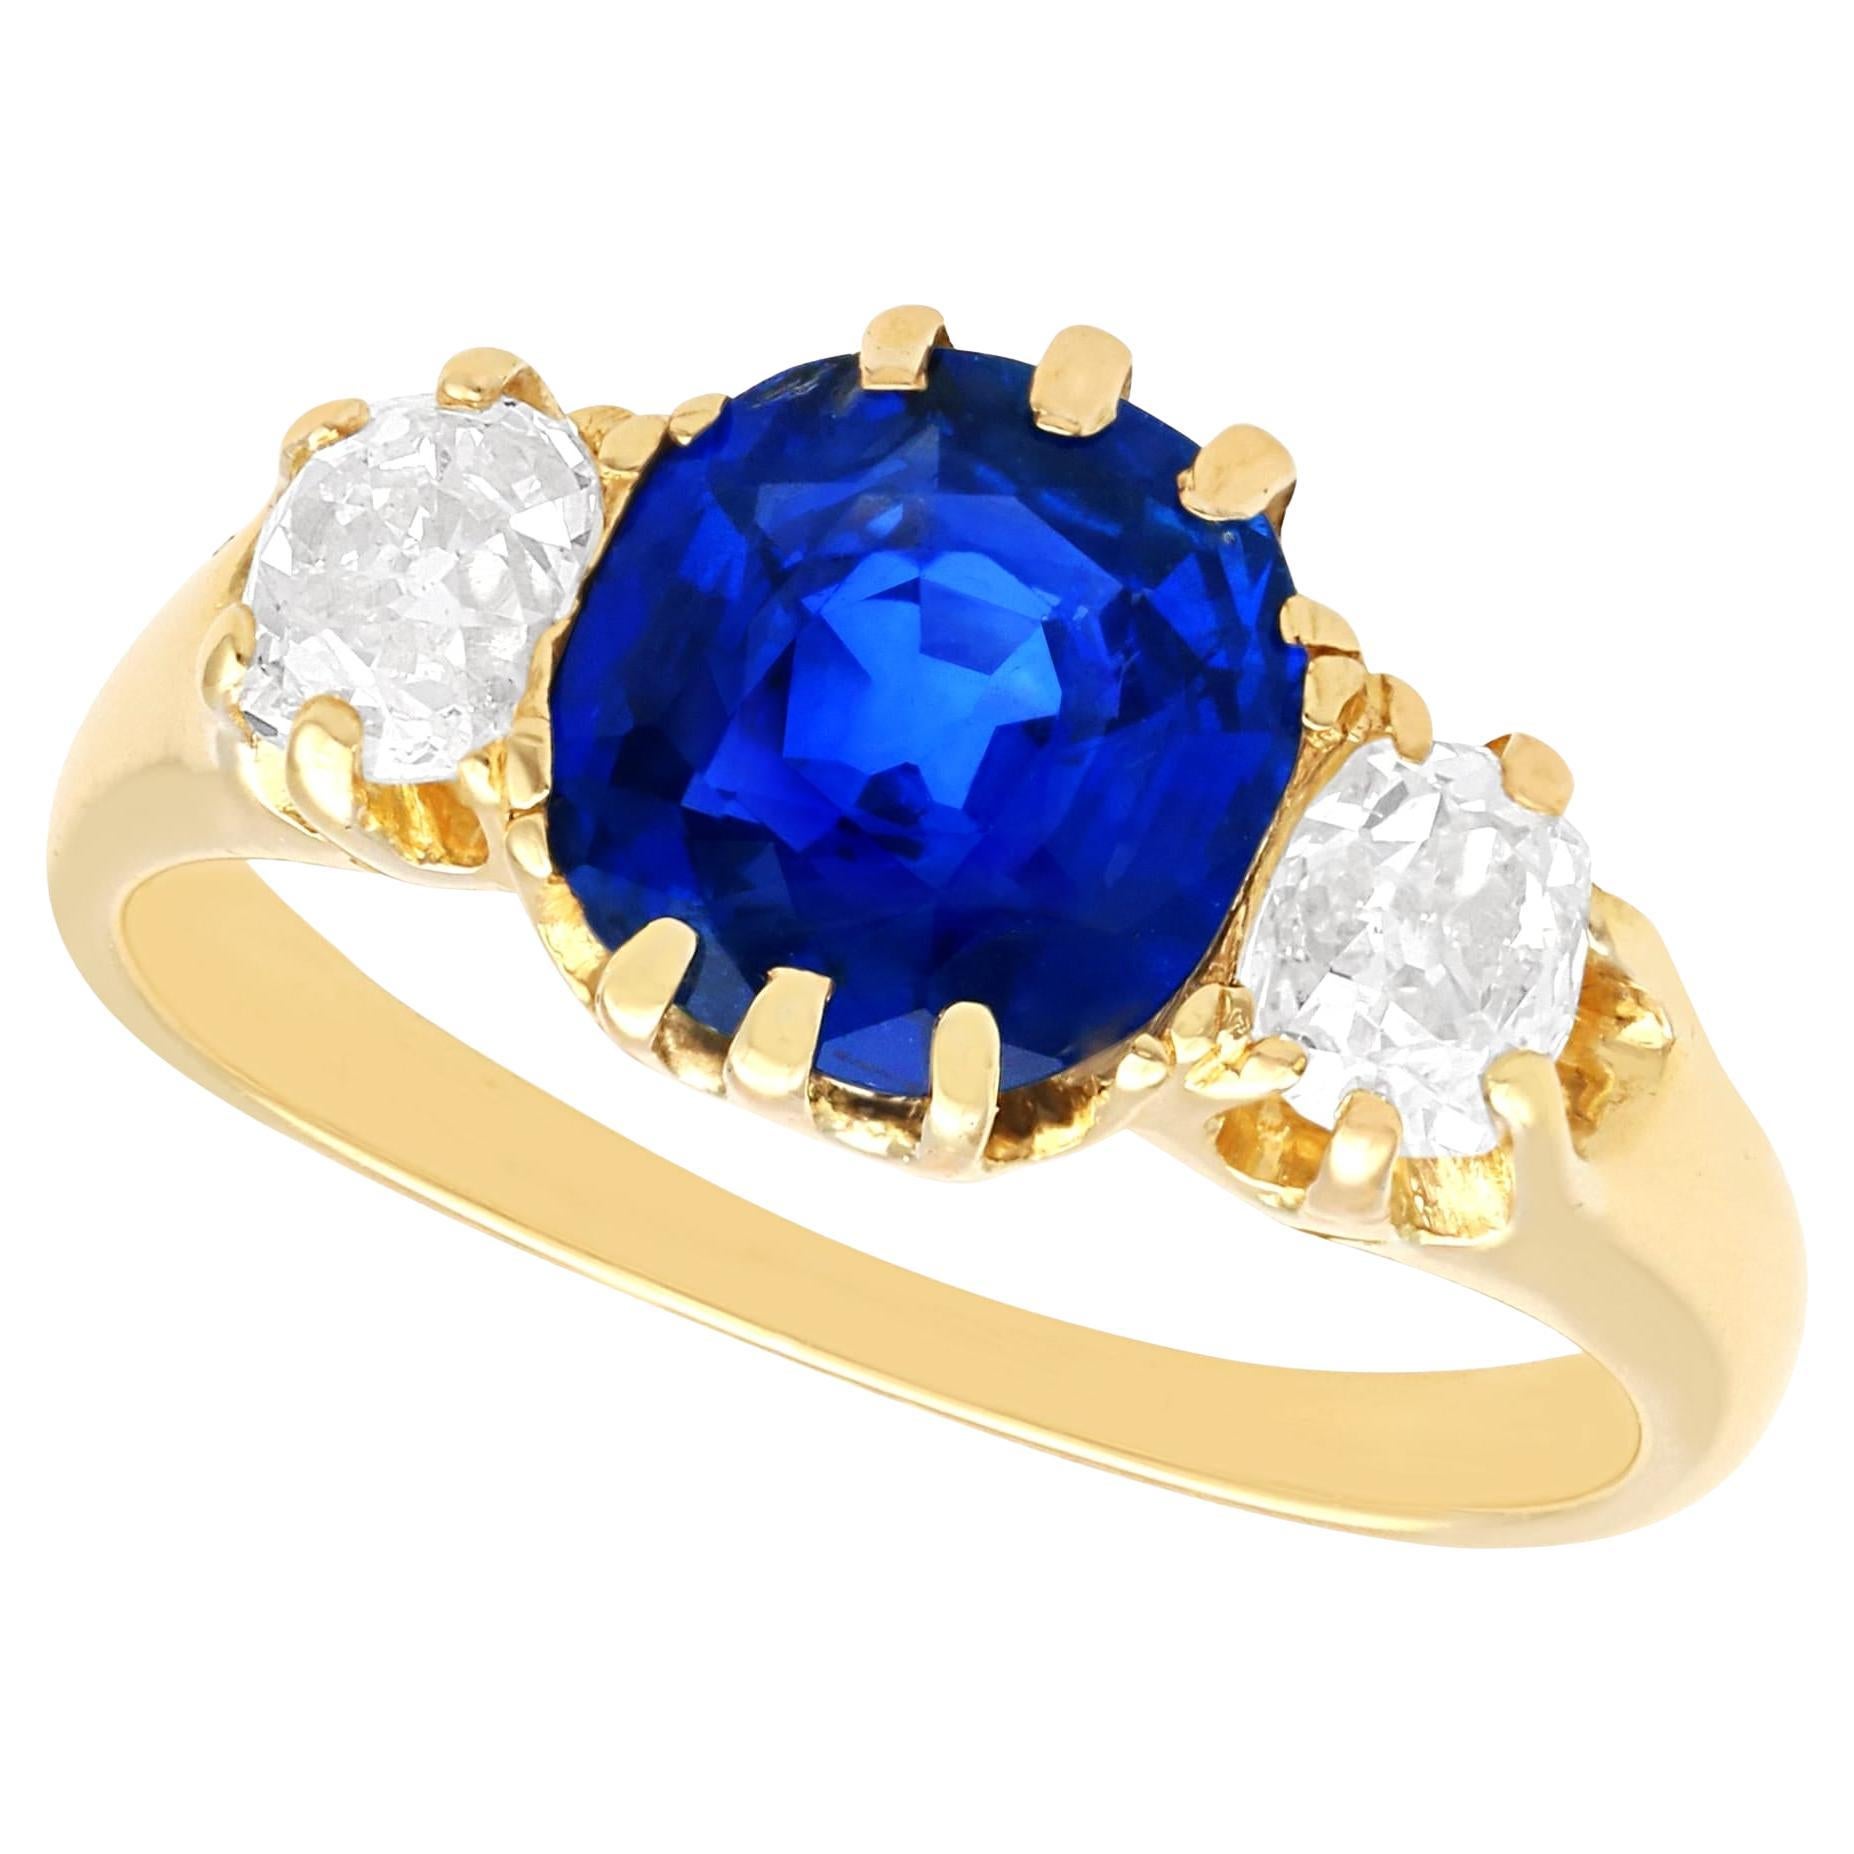 1900s Antique 2.84 Carat Ceylon Sapphire and 1.04 Carat Diamond Trilogy Ring For Sale